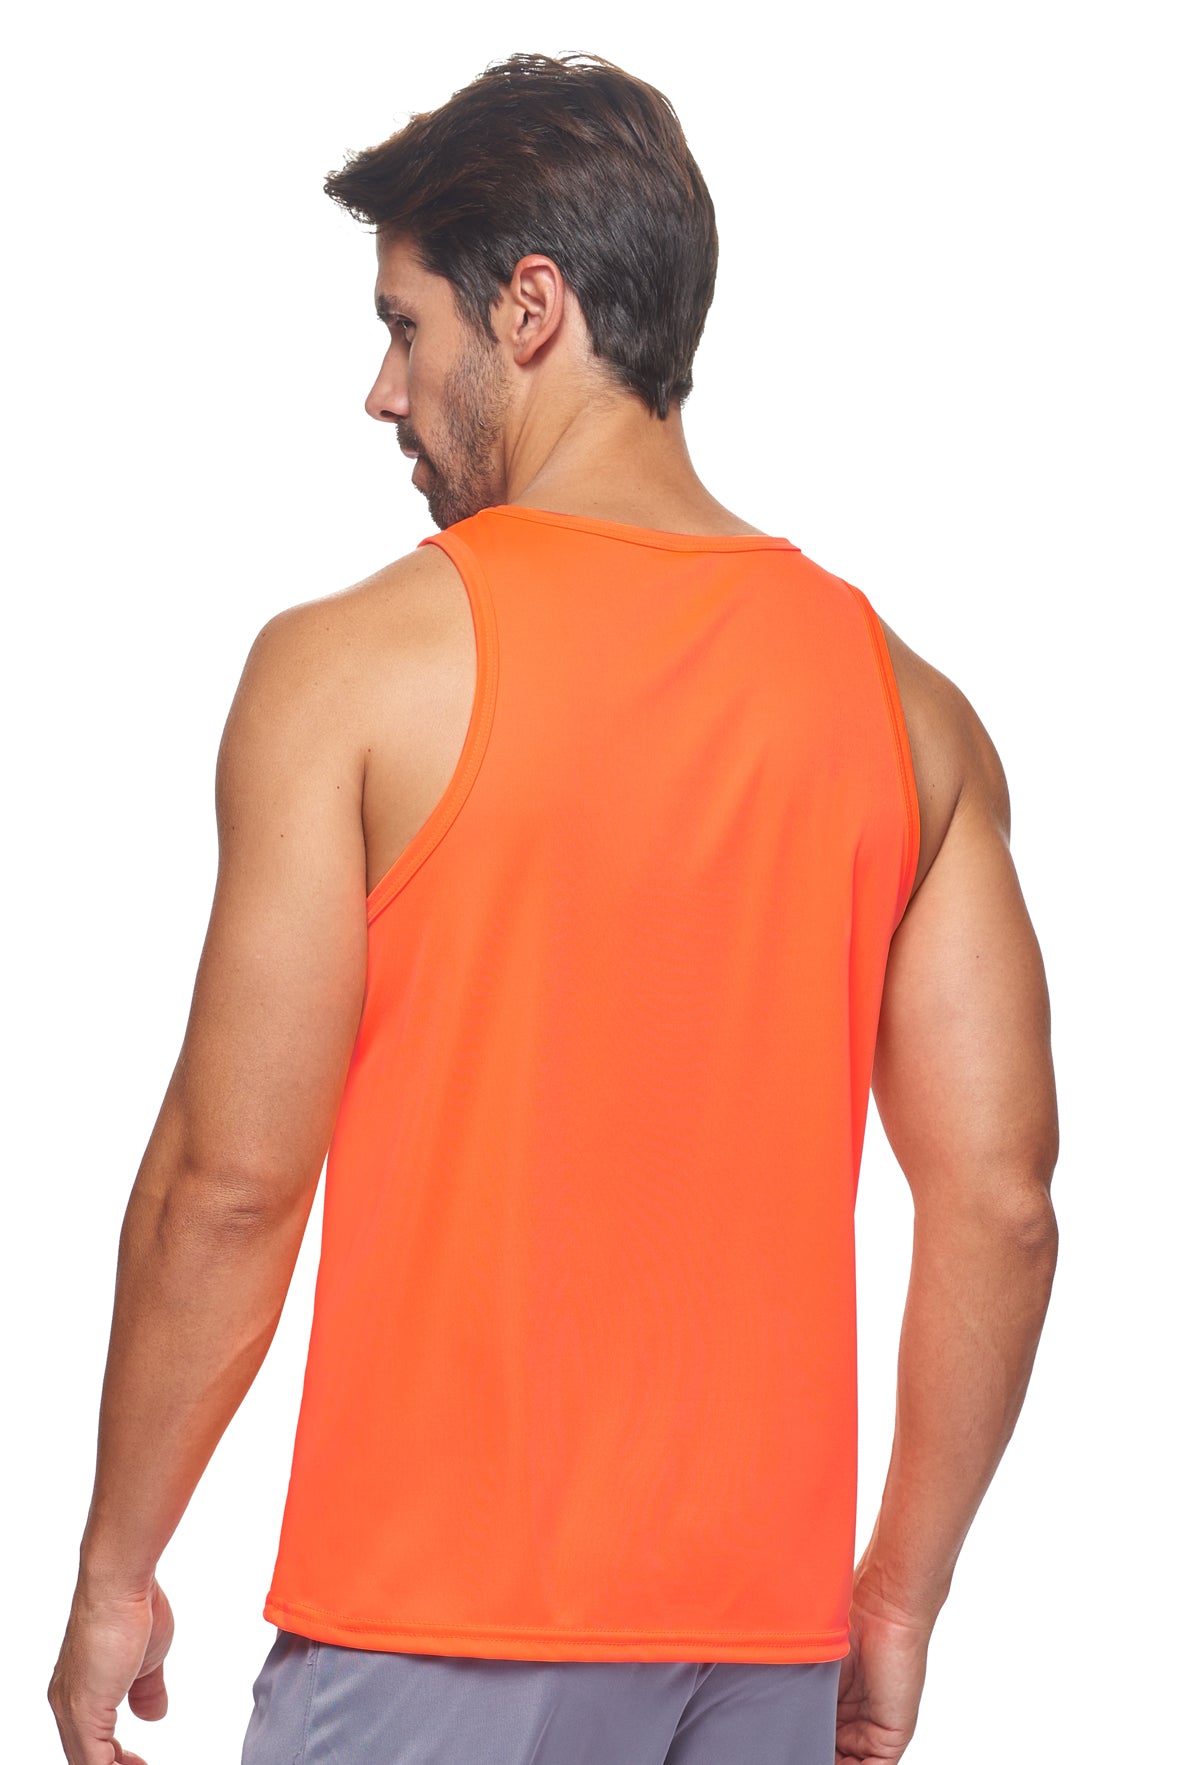 Expert Brand Retail Eco-Friendly Activewear Sportswear Men's pk MaX™ Endurance Sleeveless Tank Made in USA Safety Orange 3#color_safety-orange